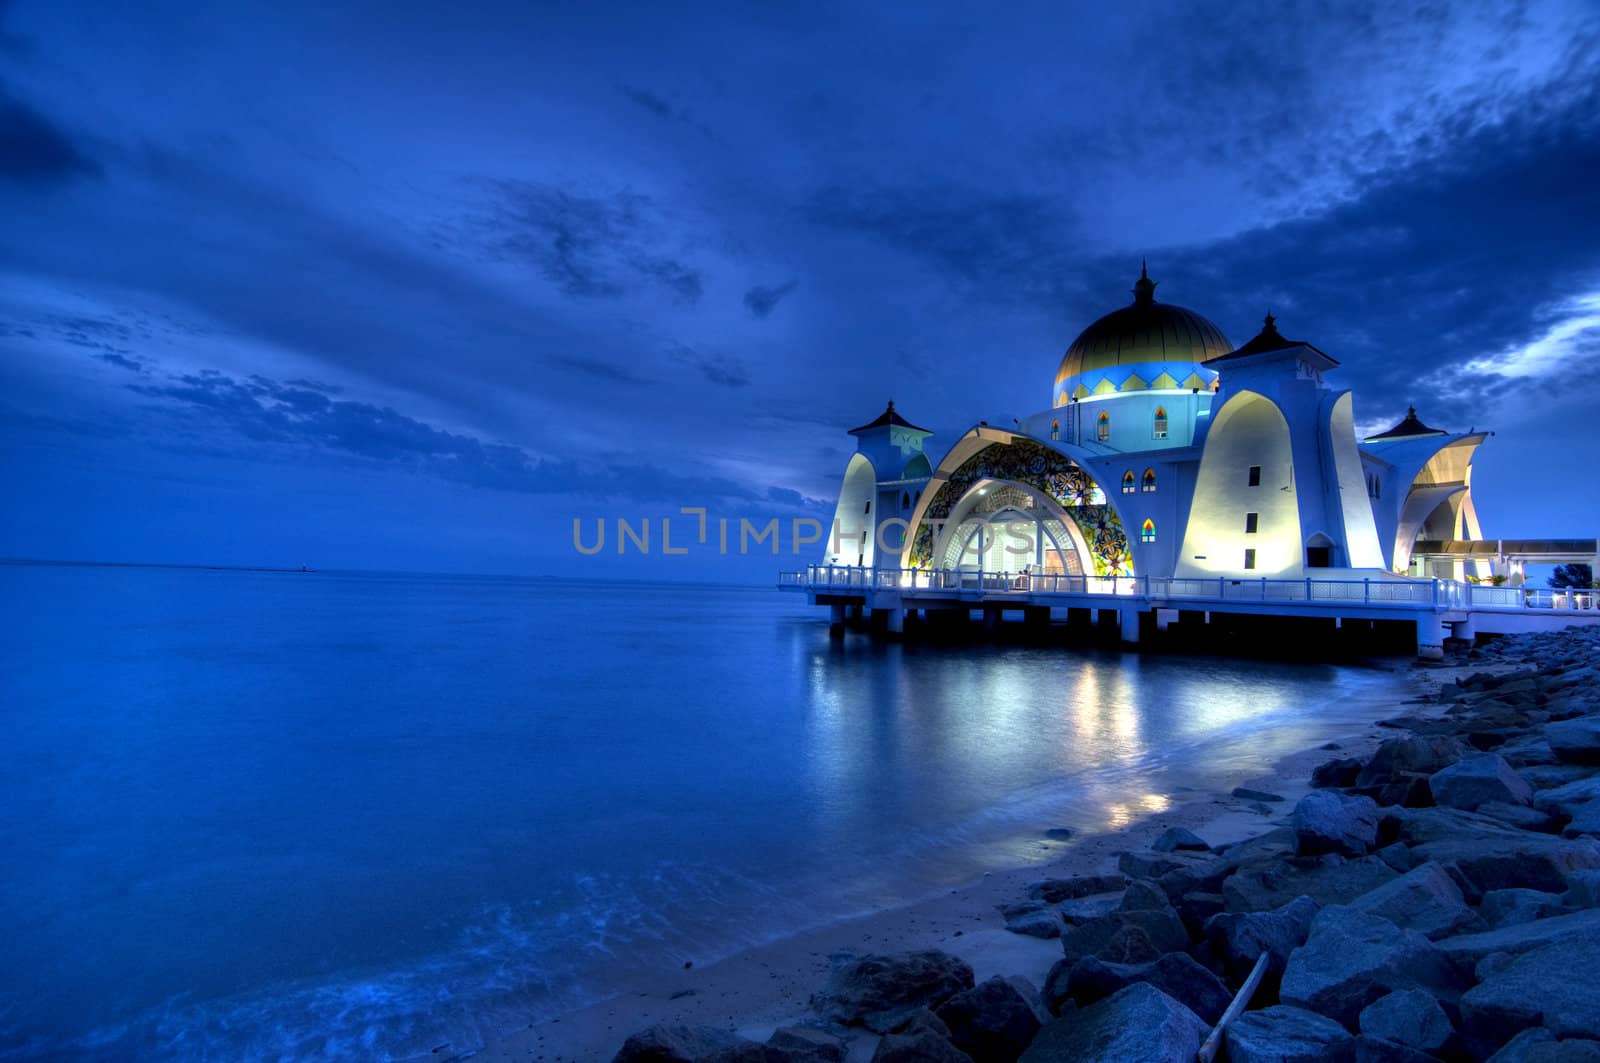 selat mosque on the sea in melaka,malaysia